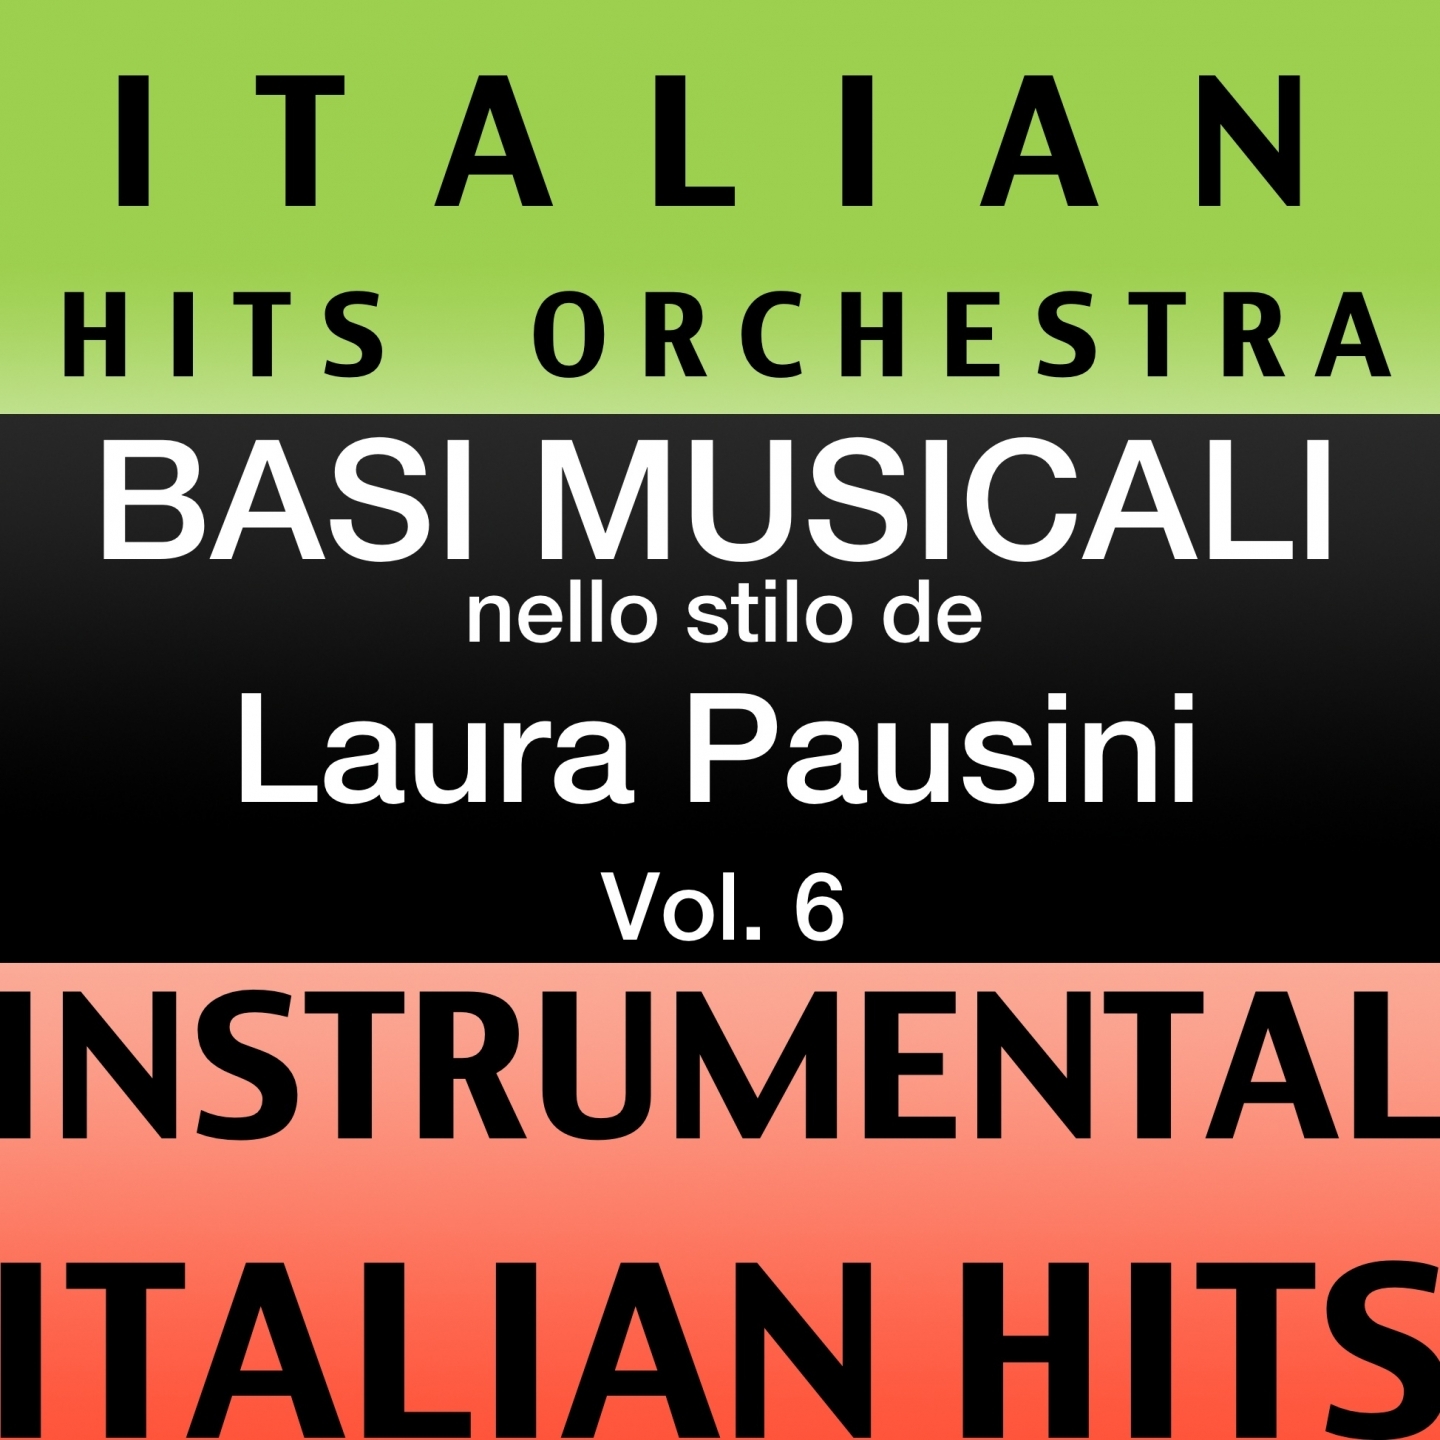 Basi musicale nello stilo dei laura pausini (instrumental karaoke tracks), Vol. 6